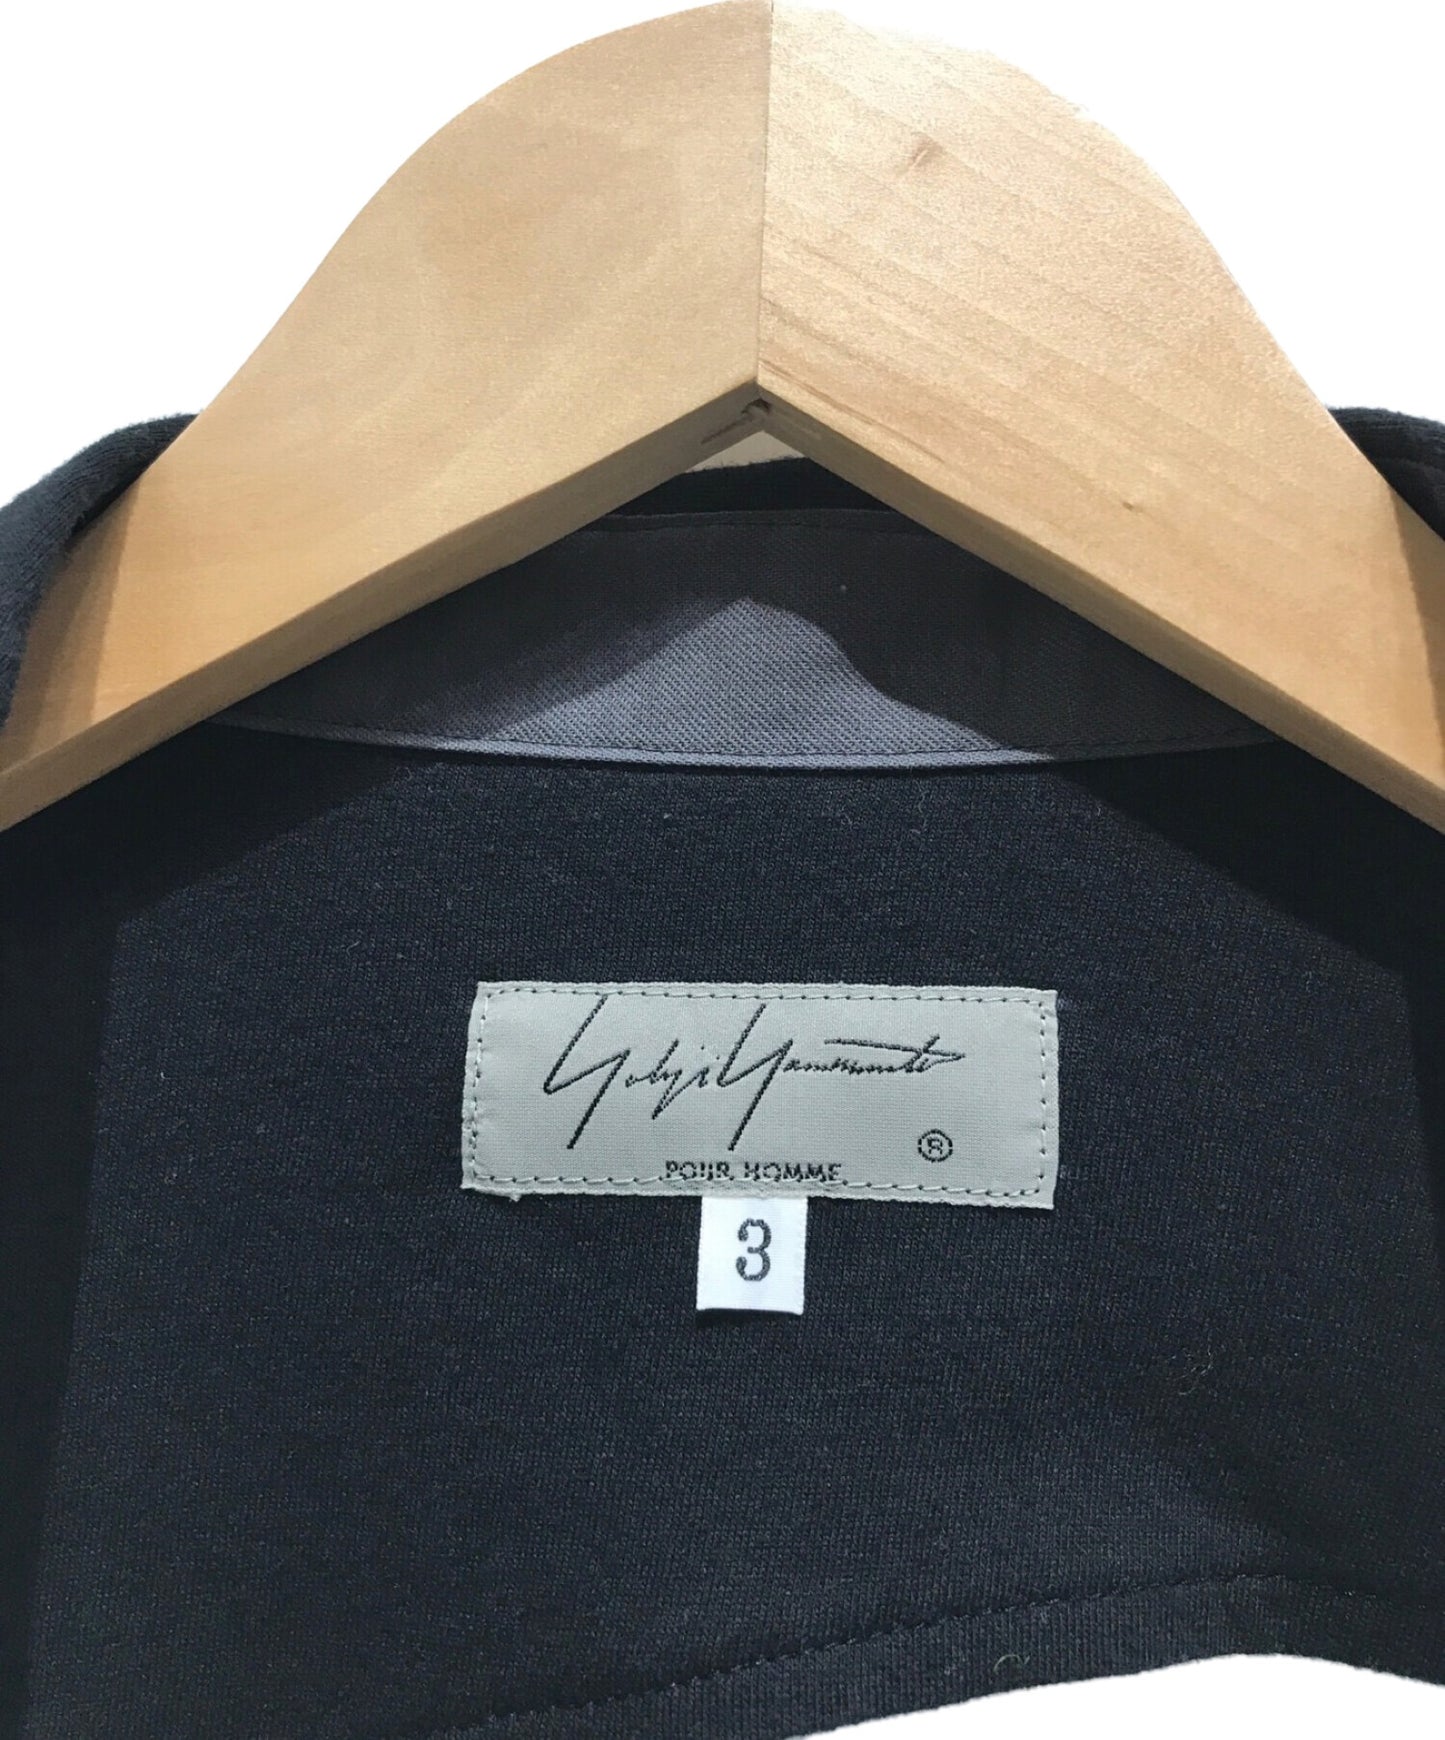 Yohji Yamamoto Pour Homme×Yuka Asakura手臂开关前插图长袖衬衫图hc-b36-818